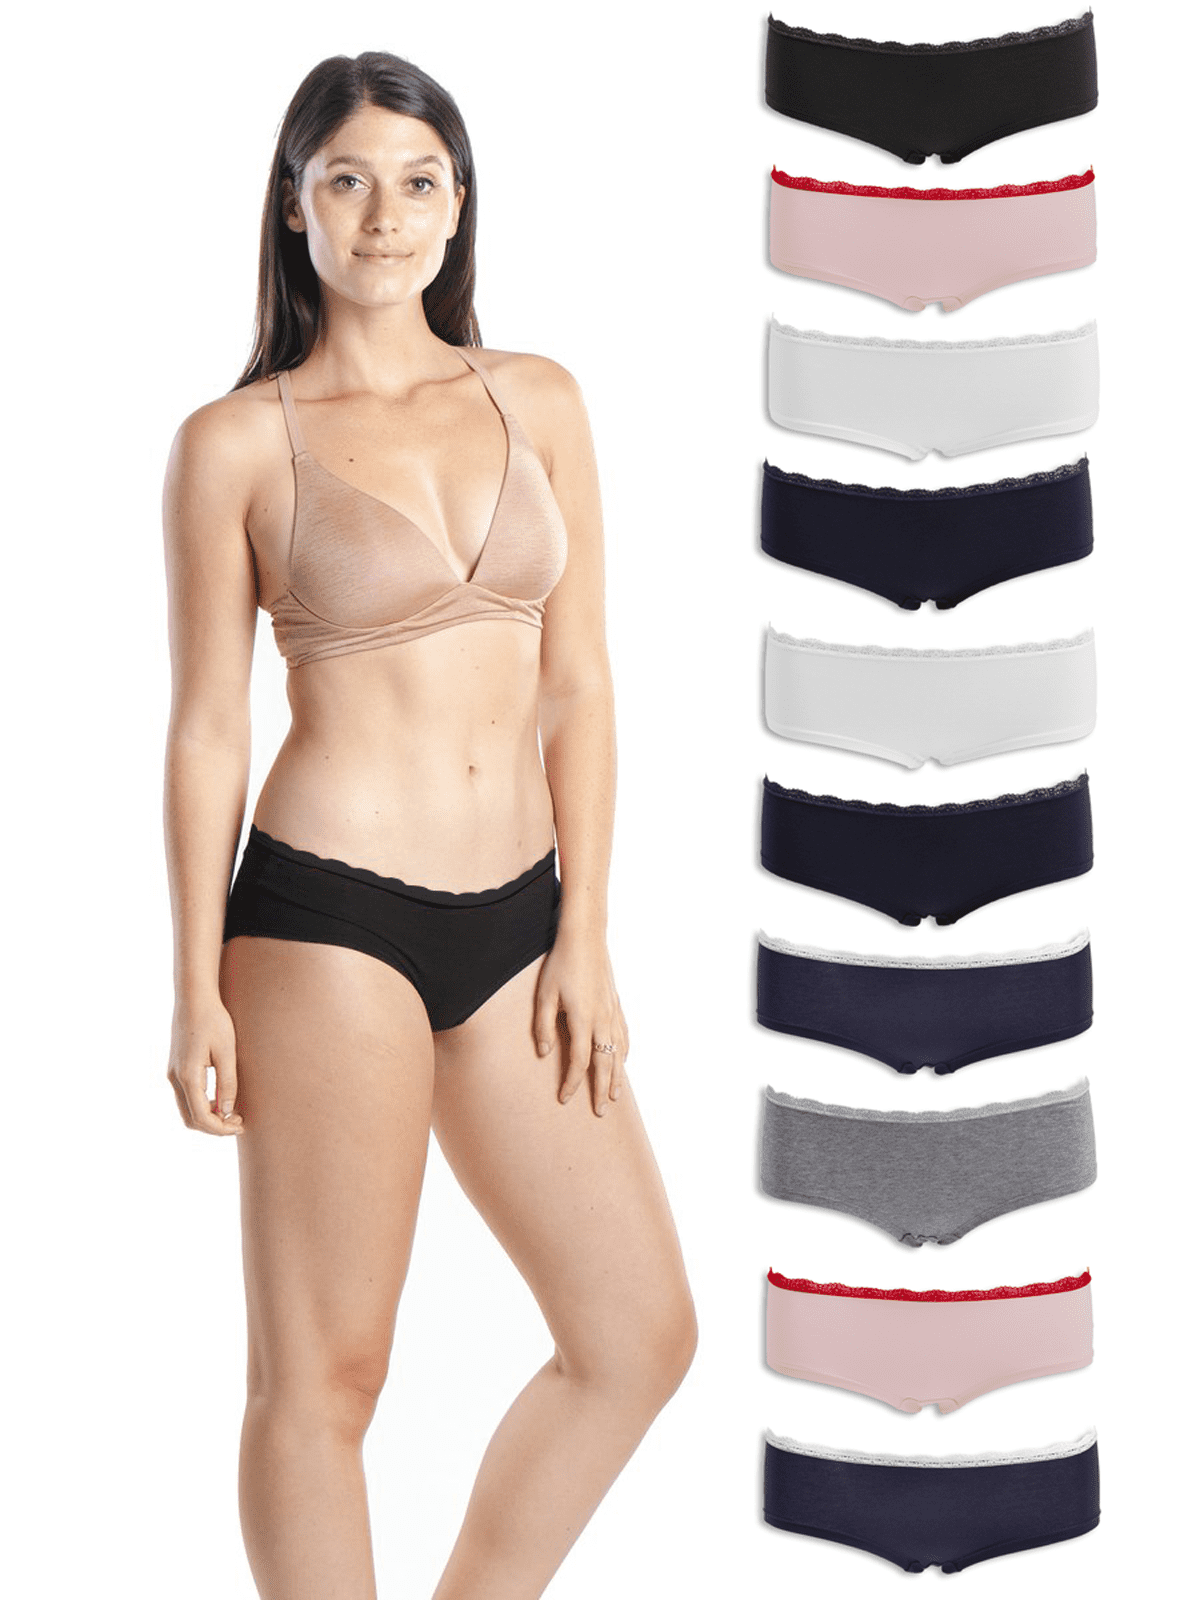 Hanes Comfort, Period. Women's Bikini Underwear, Moderate Leaks